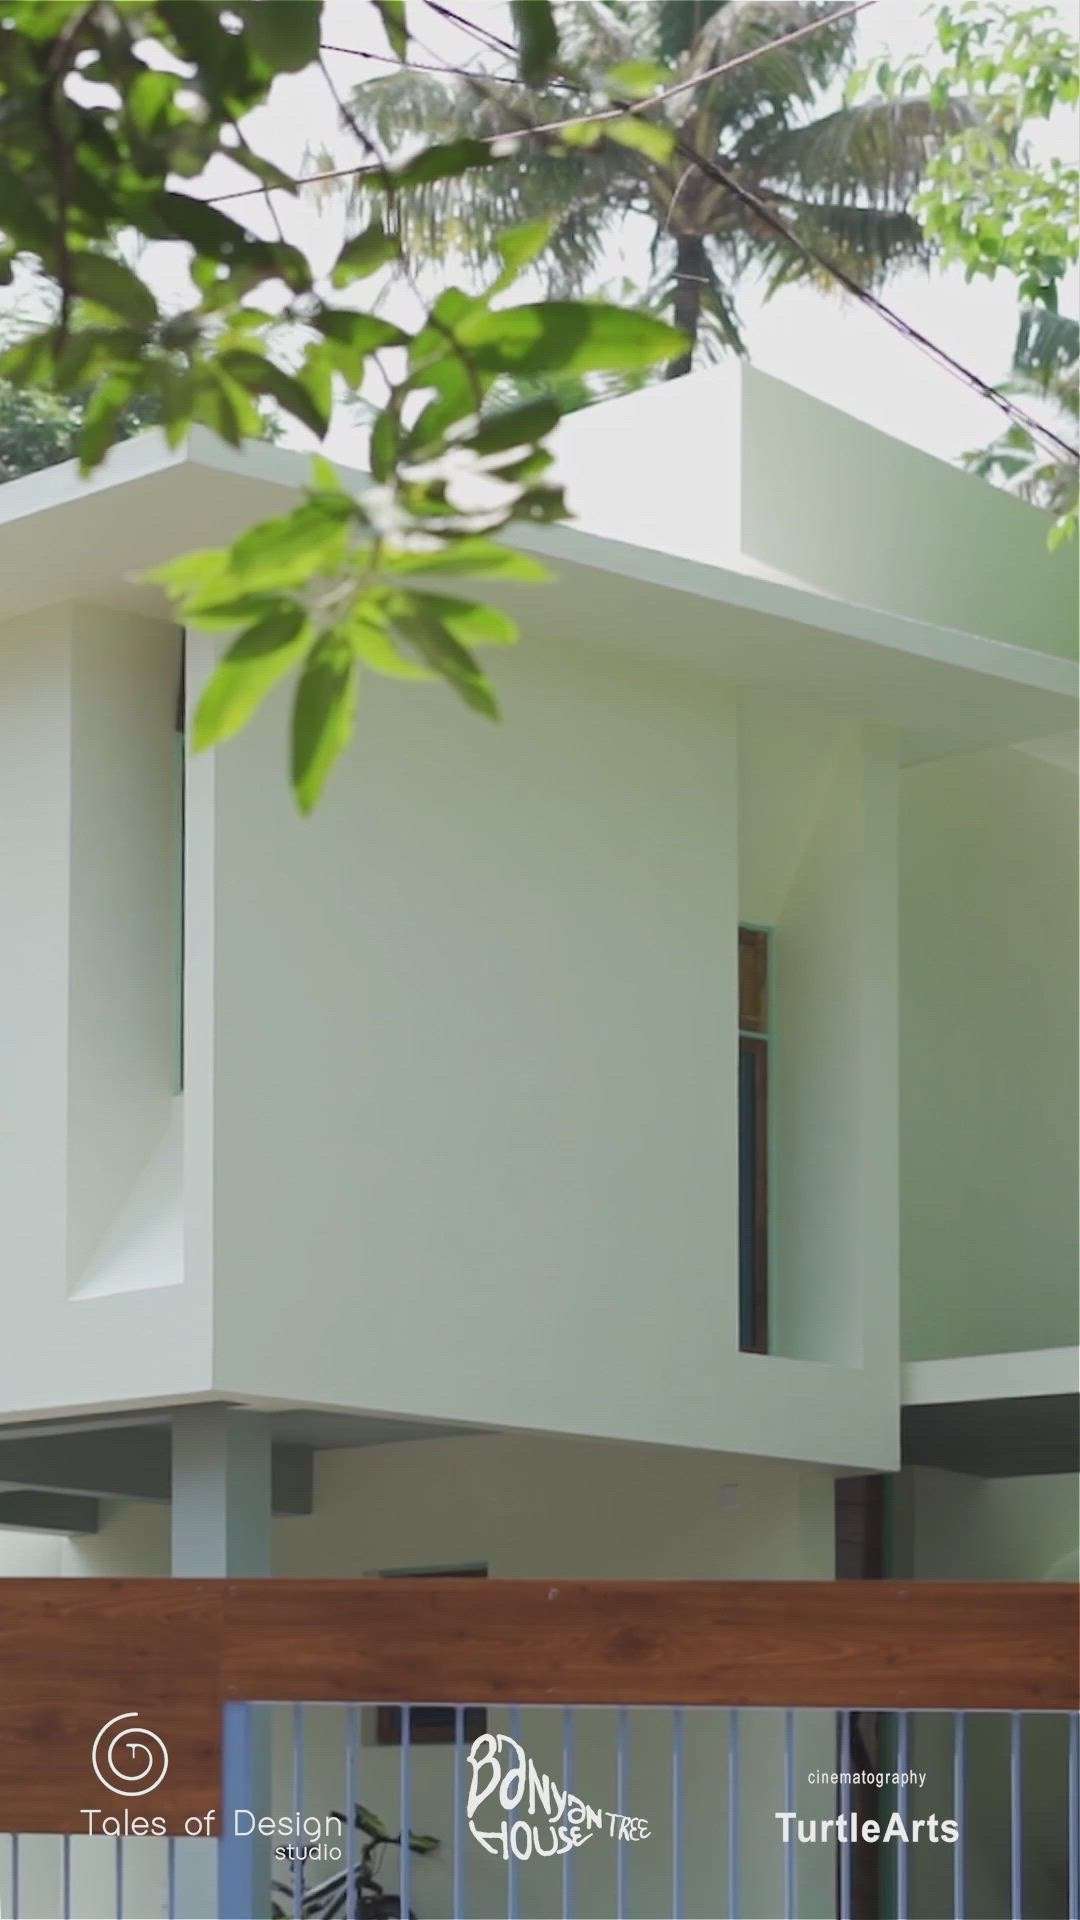 2000 Sqft | 15.5 Cents plot | 3BHK

𝗣𝗥𝗢𝗝𝗘𝗖𝗧 𝗗𝗘𝗧𝗔𝗜𝗟𝗦:
Client: Sajeesh and Dhanya
Area : 2000 sqft
Rooms : 3 BHK
Plot: 15.5 cents
Location: Mampully, Thrissur


𝗗𝗘𝗦𝗜𝗚𝗡𝗘𝗥 𝗗𝗘𝗧𝗔𝗜𝗟𝗦: 
principal architect: Shammi A Shareef
@tales_of_design
ph: 8943333118
https://talesofdesign.in
contact : talesofdesignstudio@gmail.com

Kolo - India’s Largest Home Construction Community 🏠

#fyp #reelitfeelit #koloapp #veedu #homedecor #enteveedu #homedesign #keralahomedesignz #nattiloruveedu #instagood #interiordesign #interior #interiordesigner #homedecoration #homedesign #home #homedesignideas #keralahomes #homedecor #homes #homestyling #traditional #kerala #homesweethome #architecturedesign #architecture #keralaarchitecture #architecture #modernarchitecture